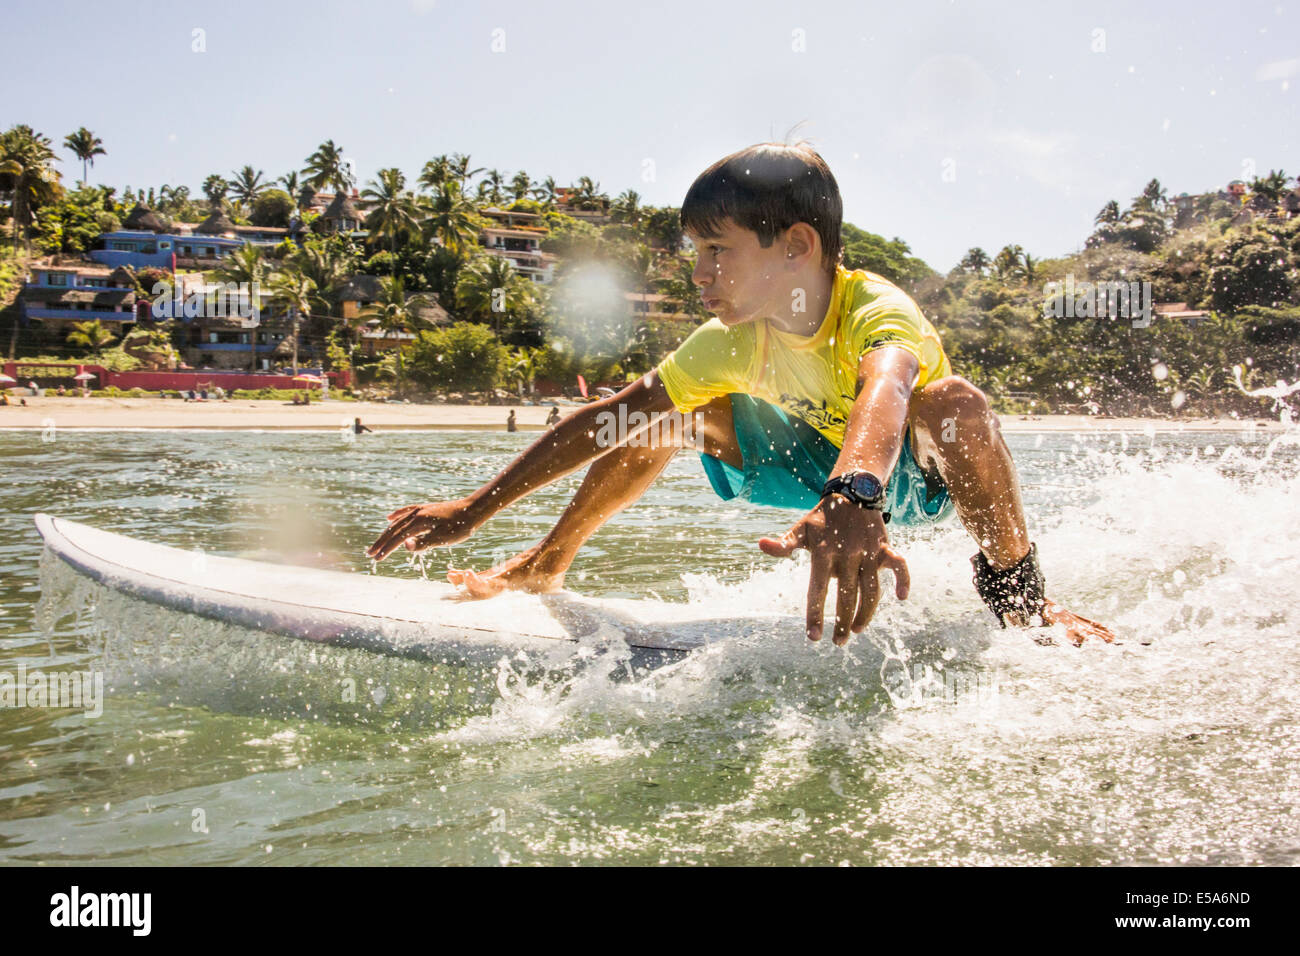 Mixed race boy surfing in ocean Stock Photo